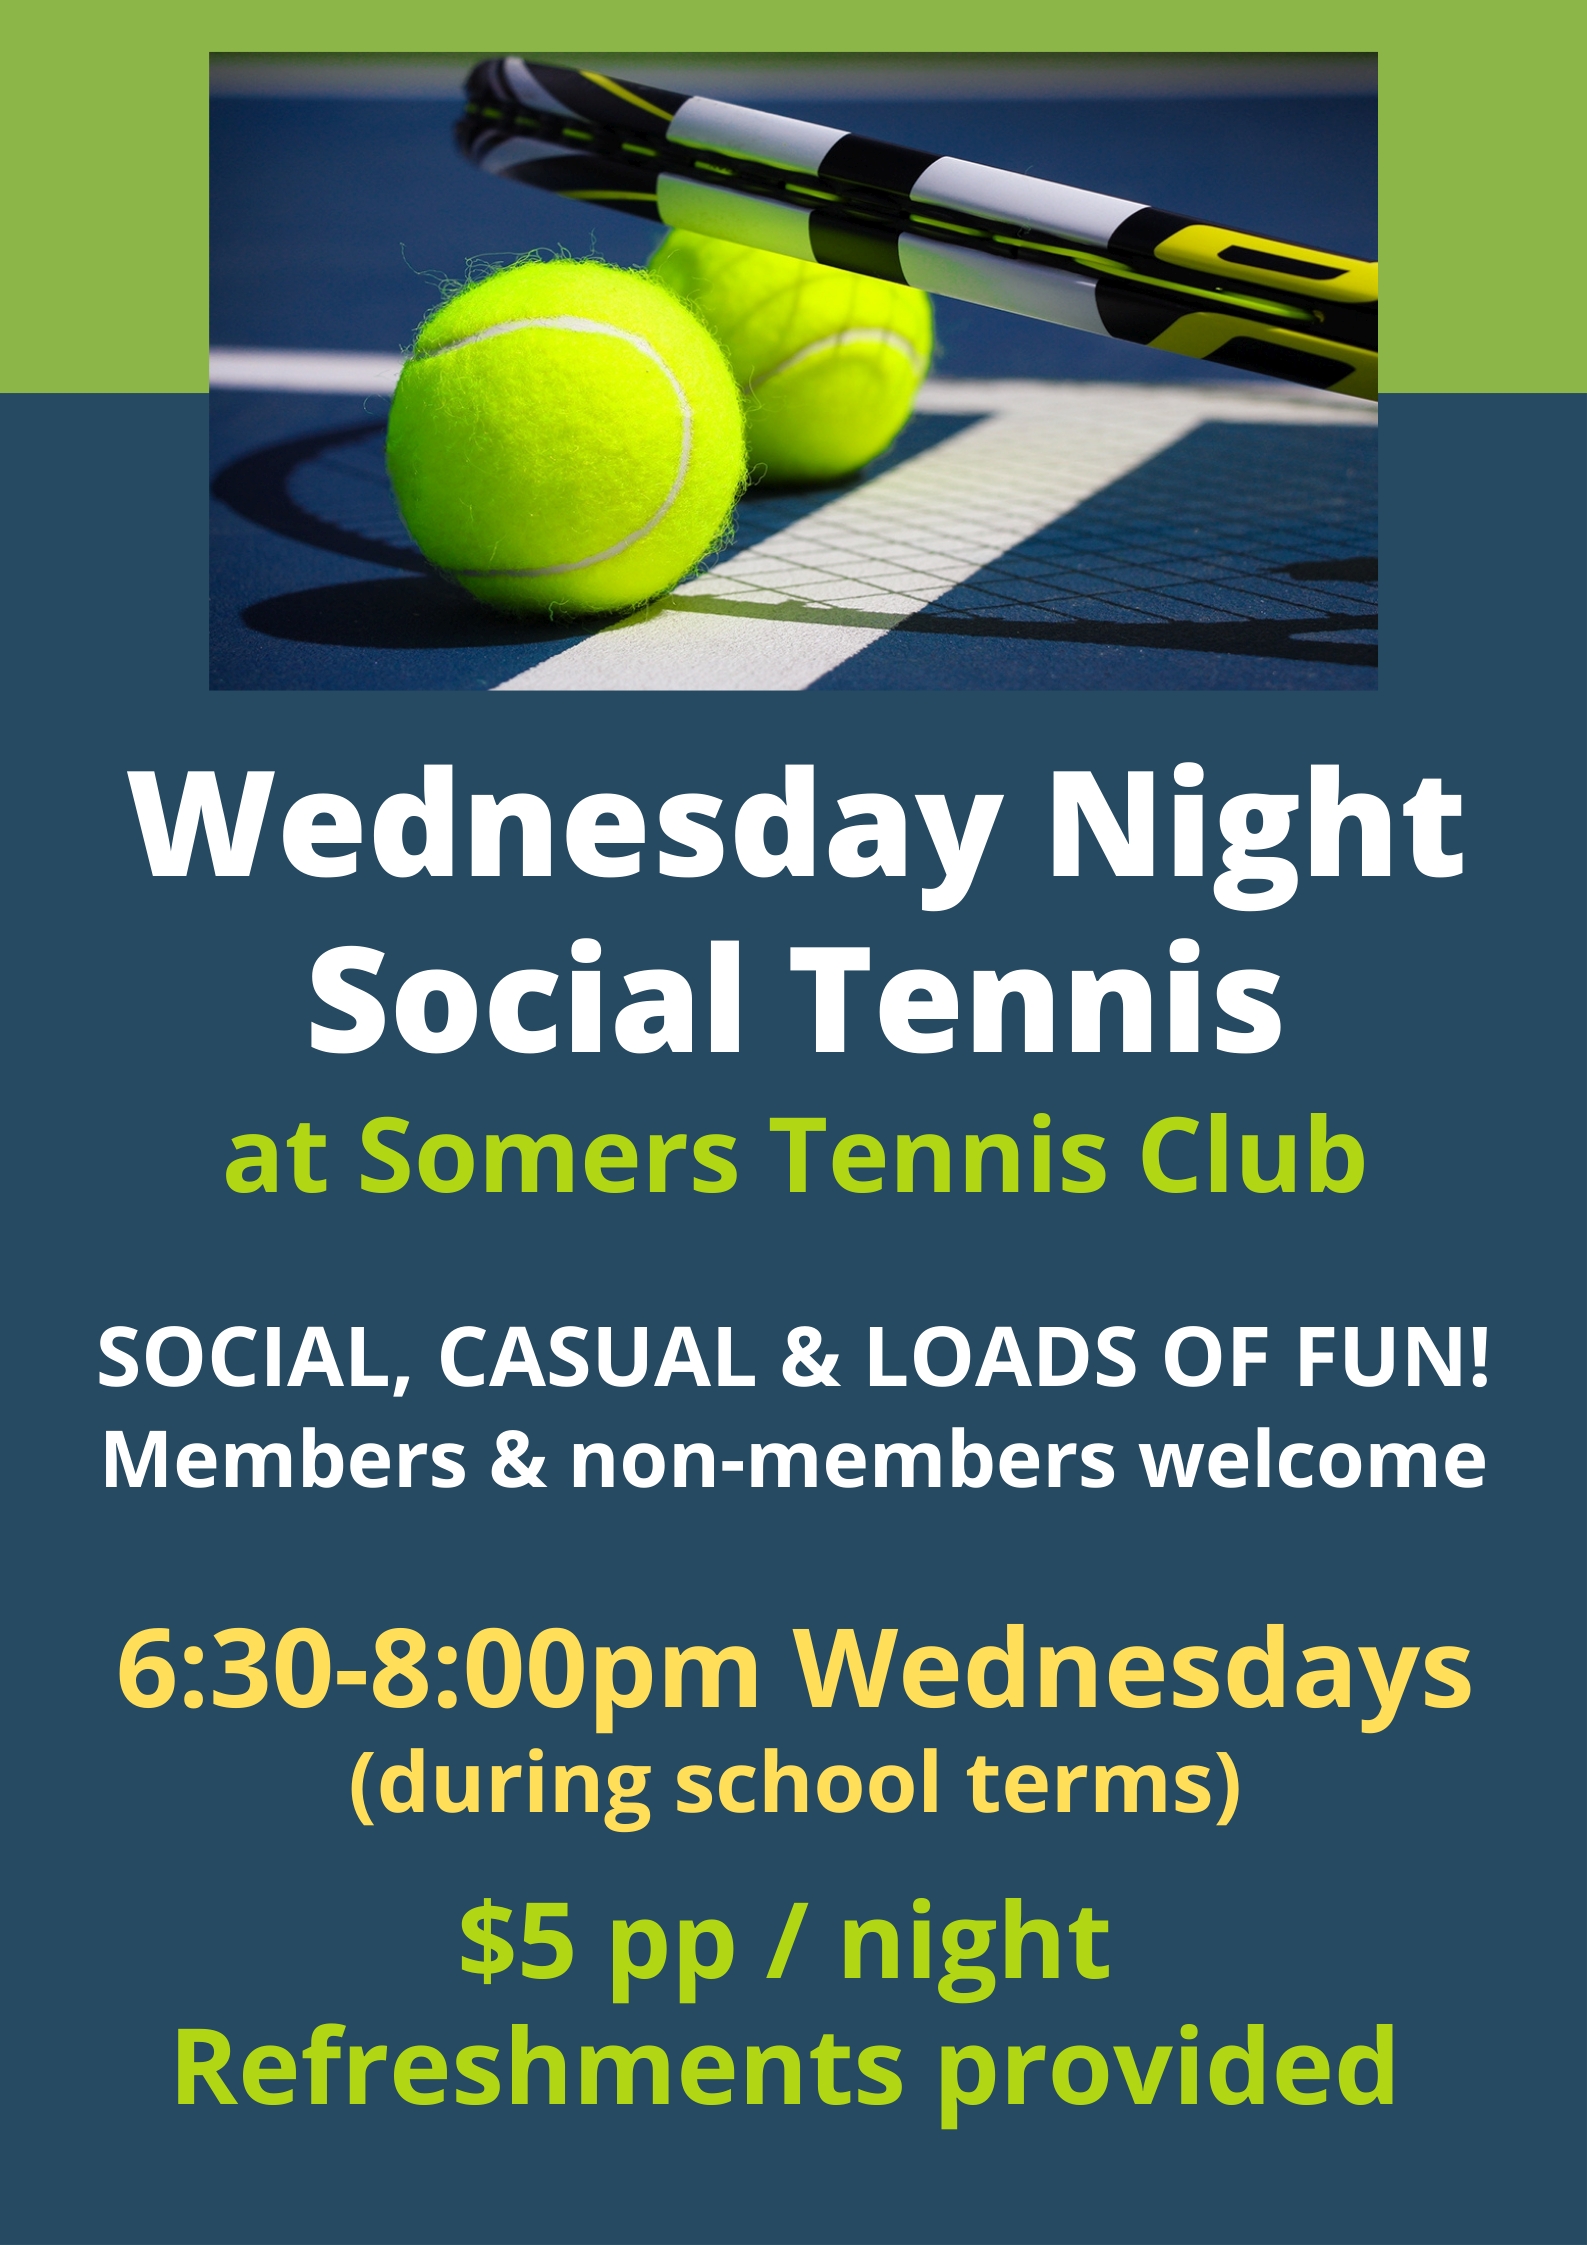 Wednesday Night Social Tennis